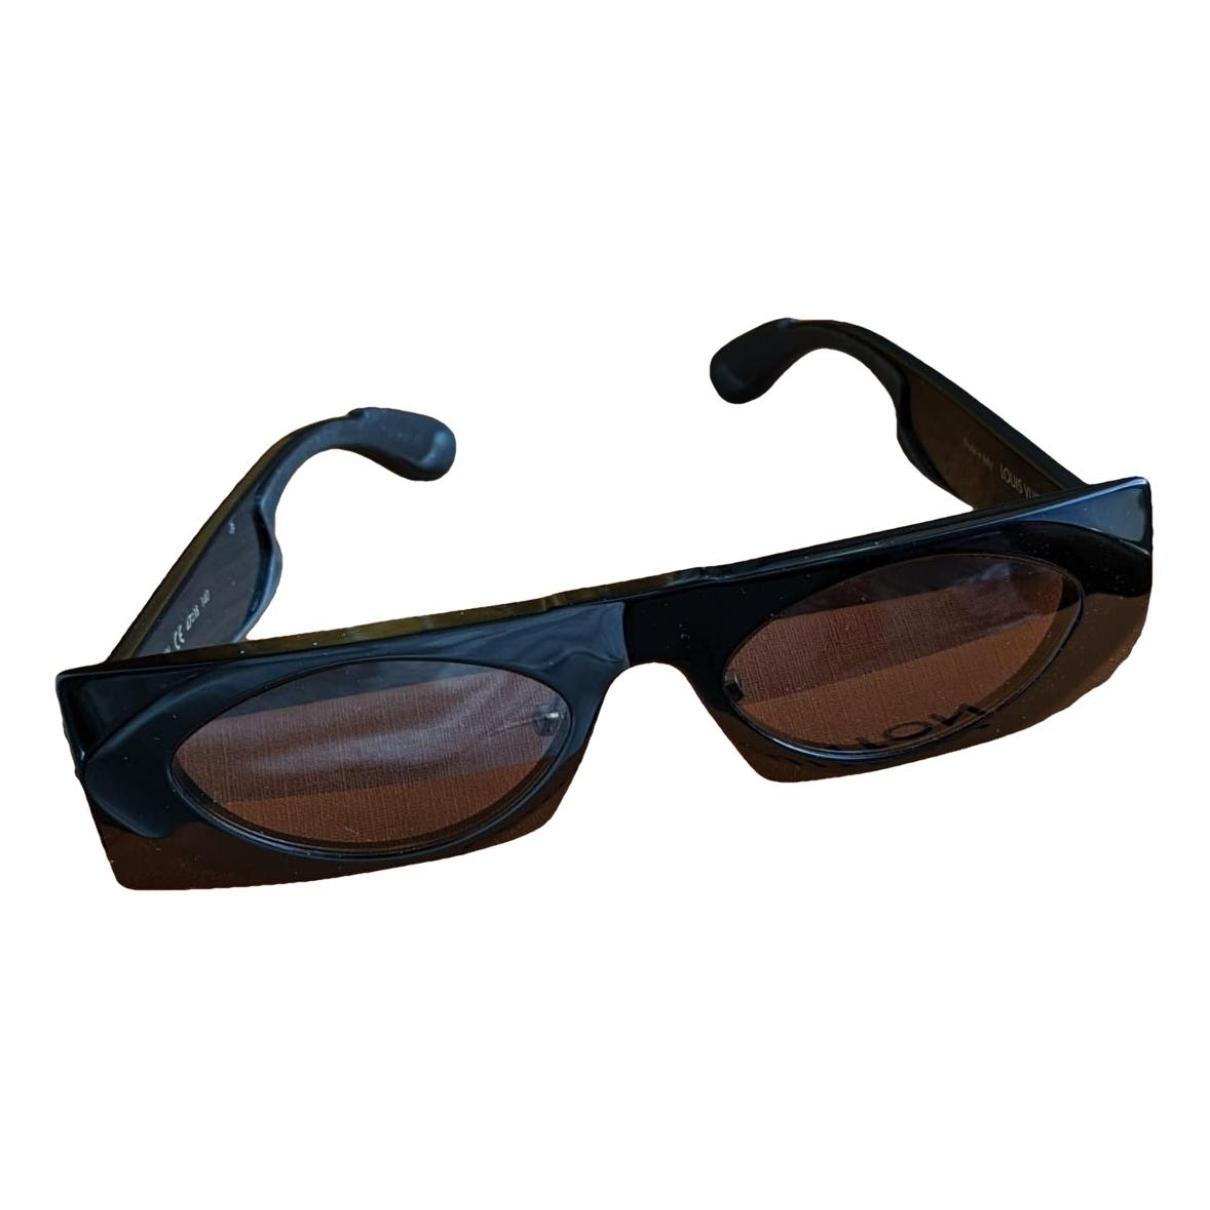 Milanuncios - gafas de sol louis vuitton hombre